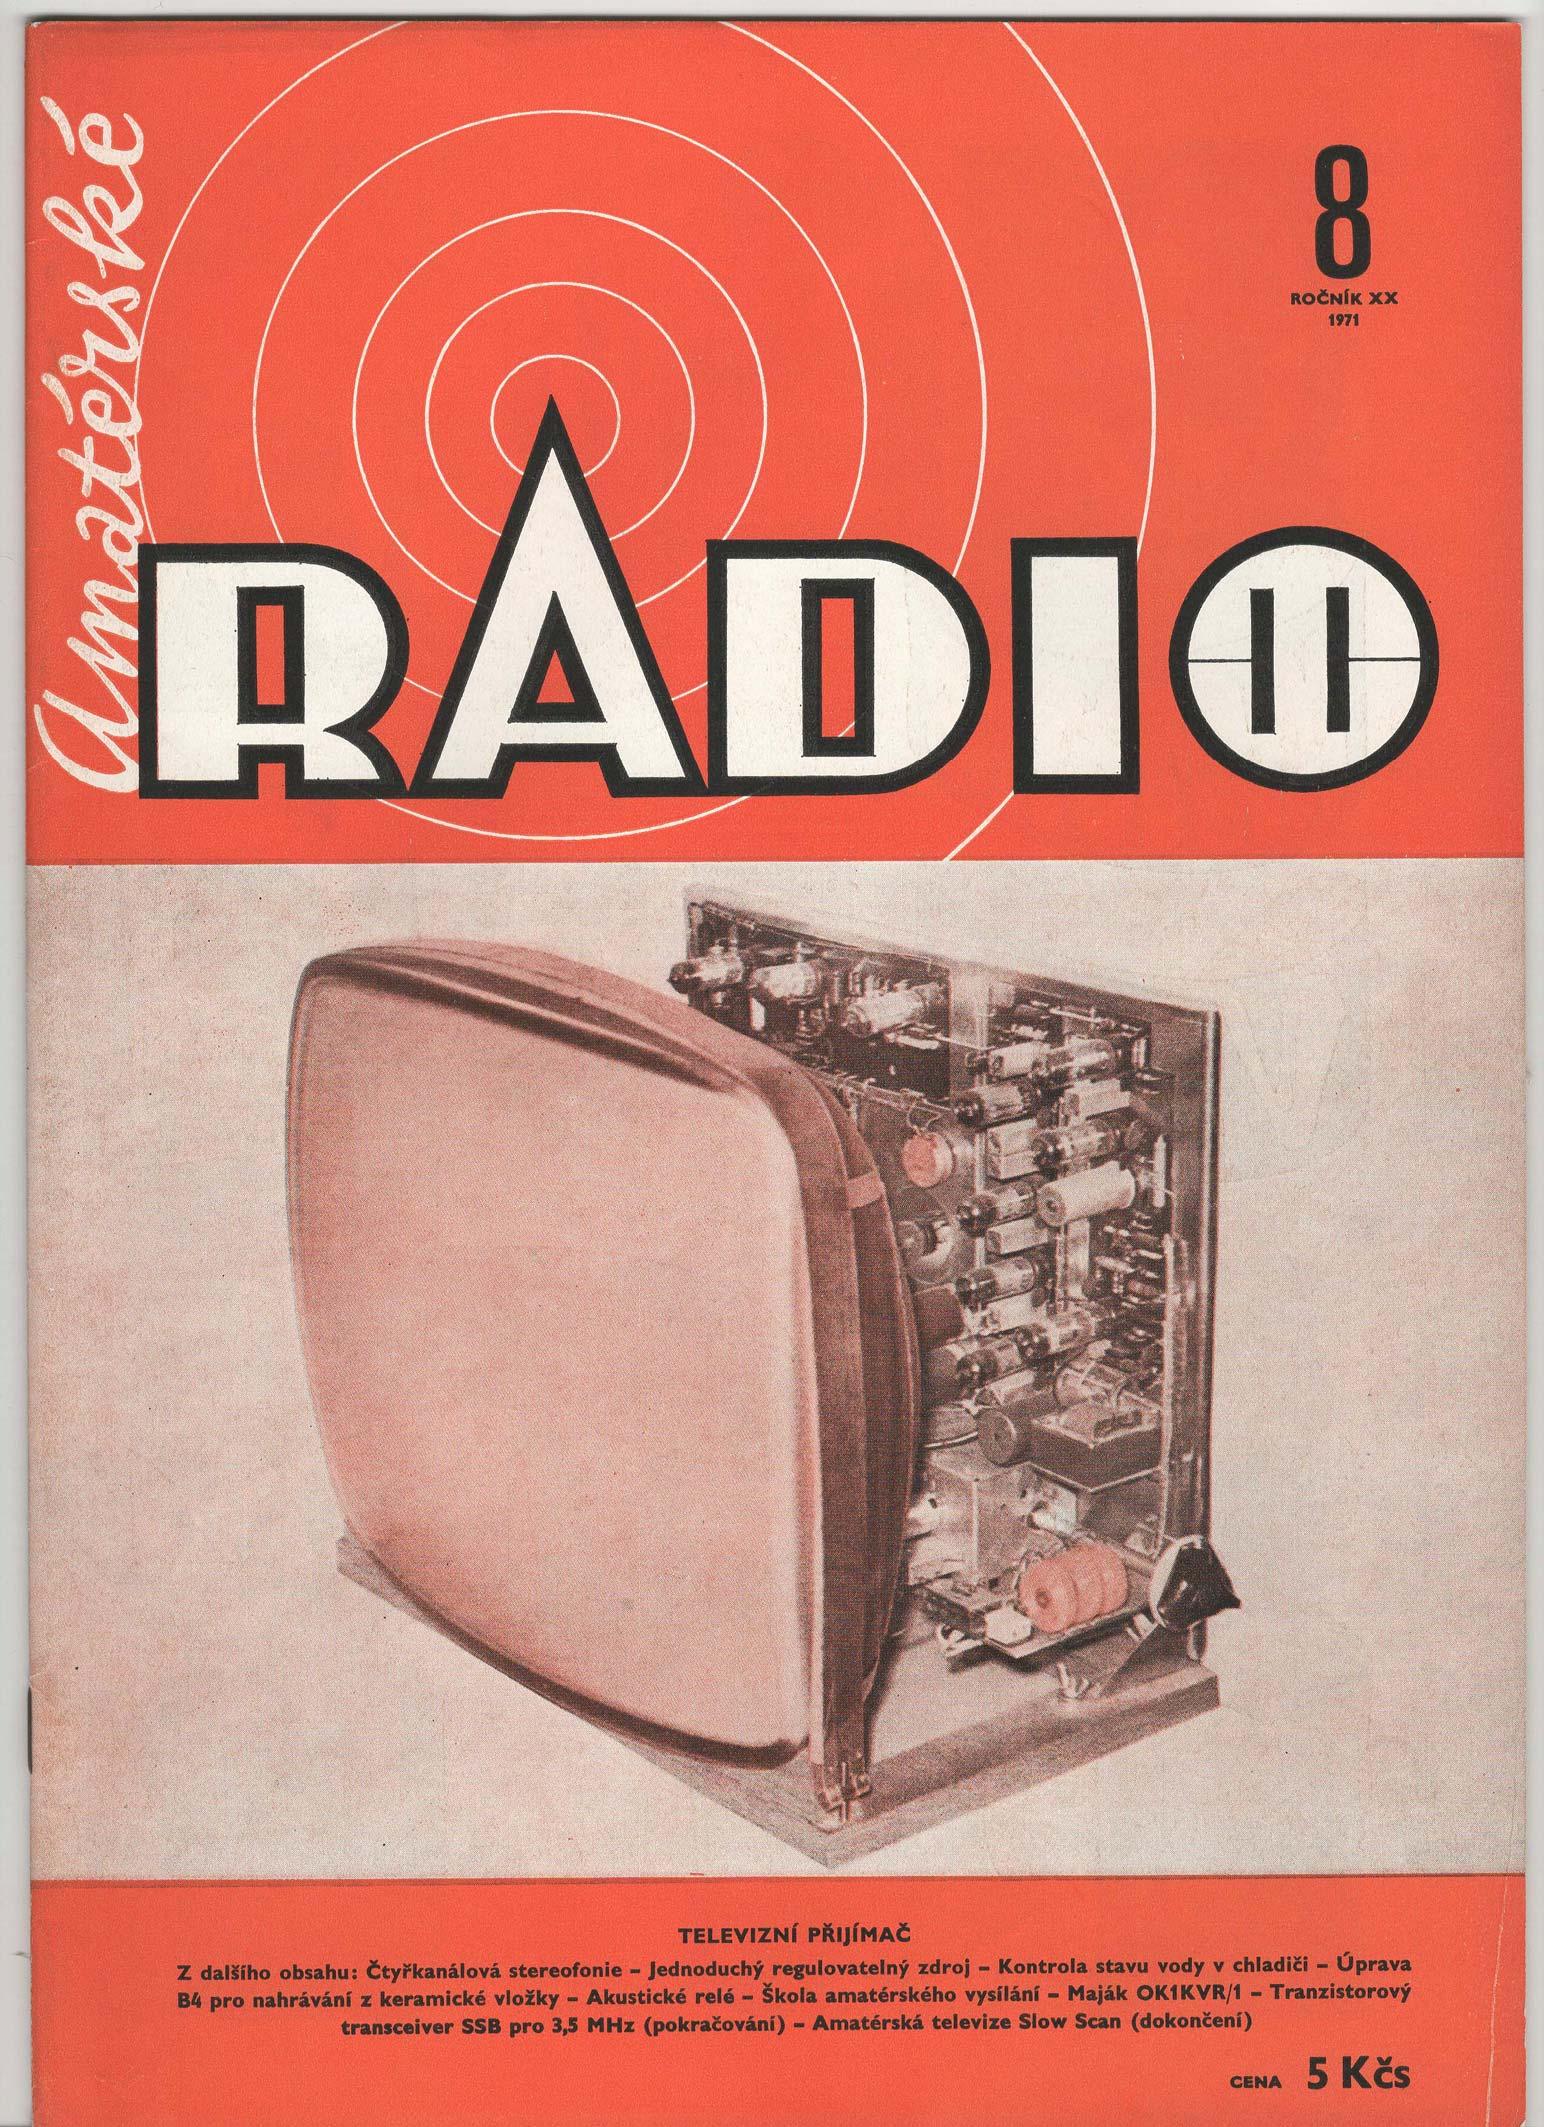 Amaterske Radio Magazine - 7 Rocnik XX 1971 - Rare Collectable